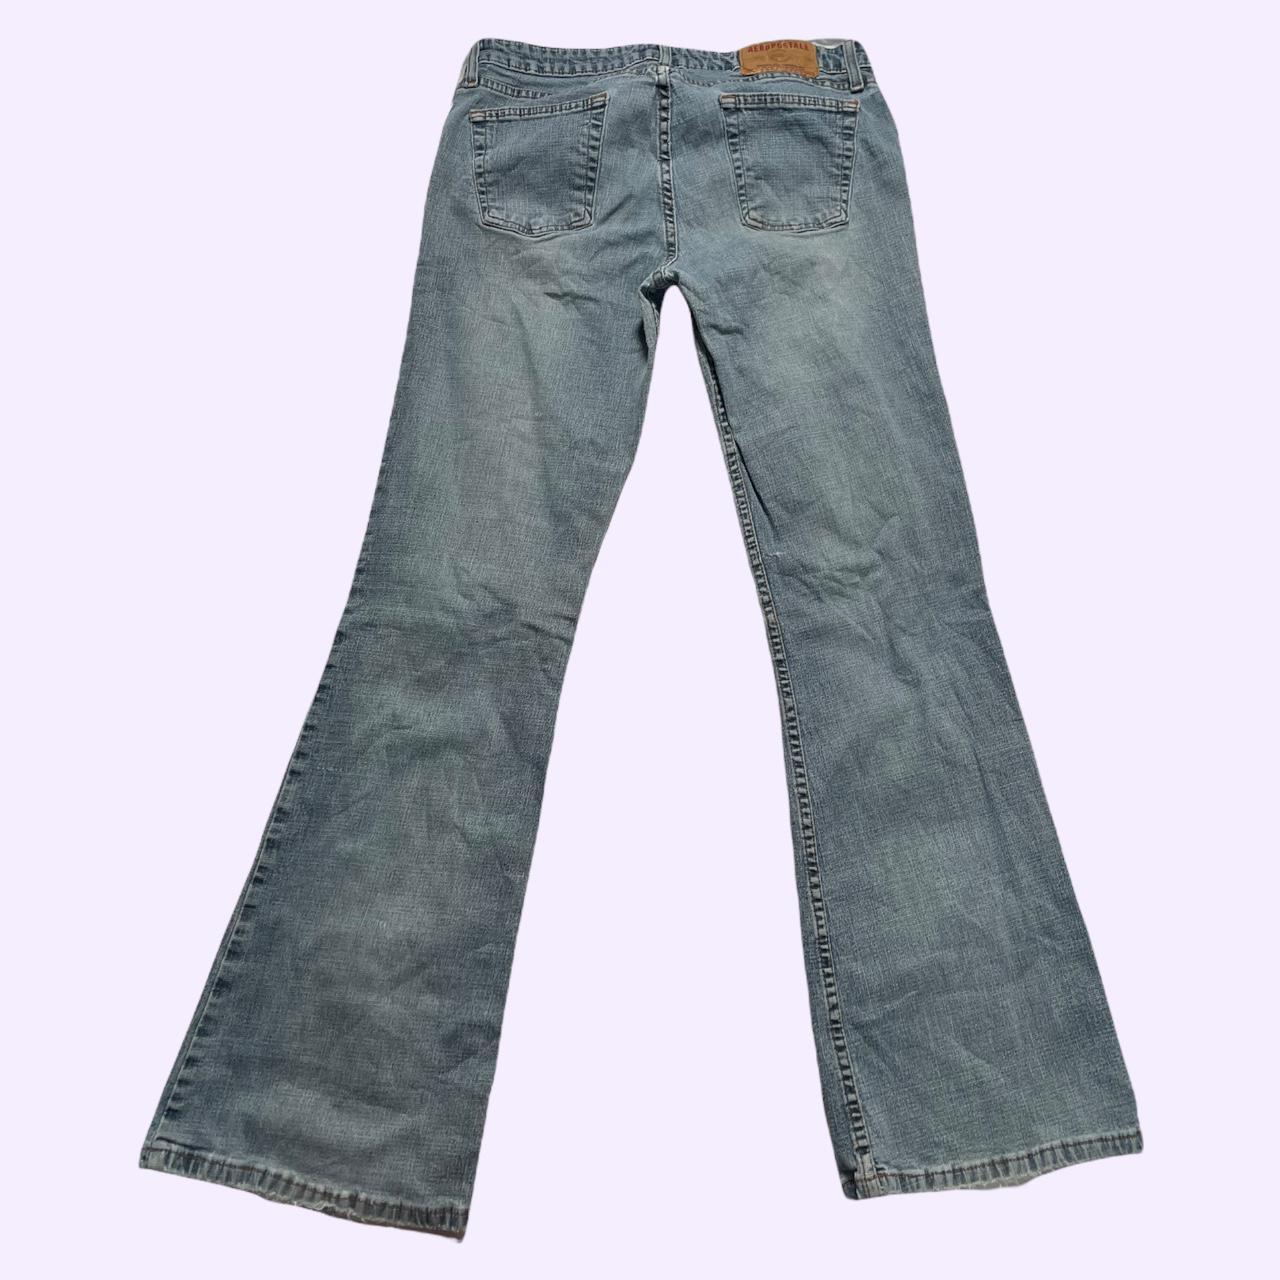 Product Image 2 - Vintage Aeropostale low rise jeans,